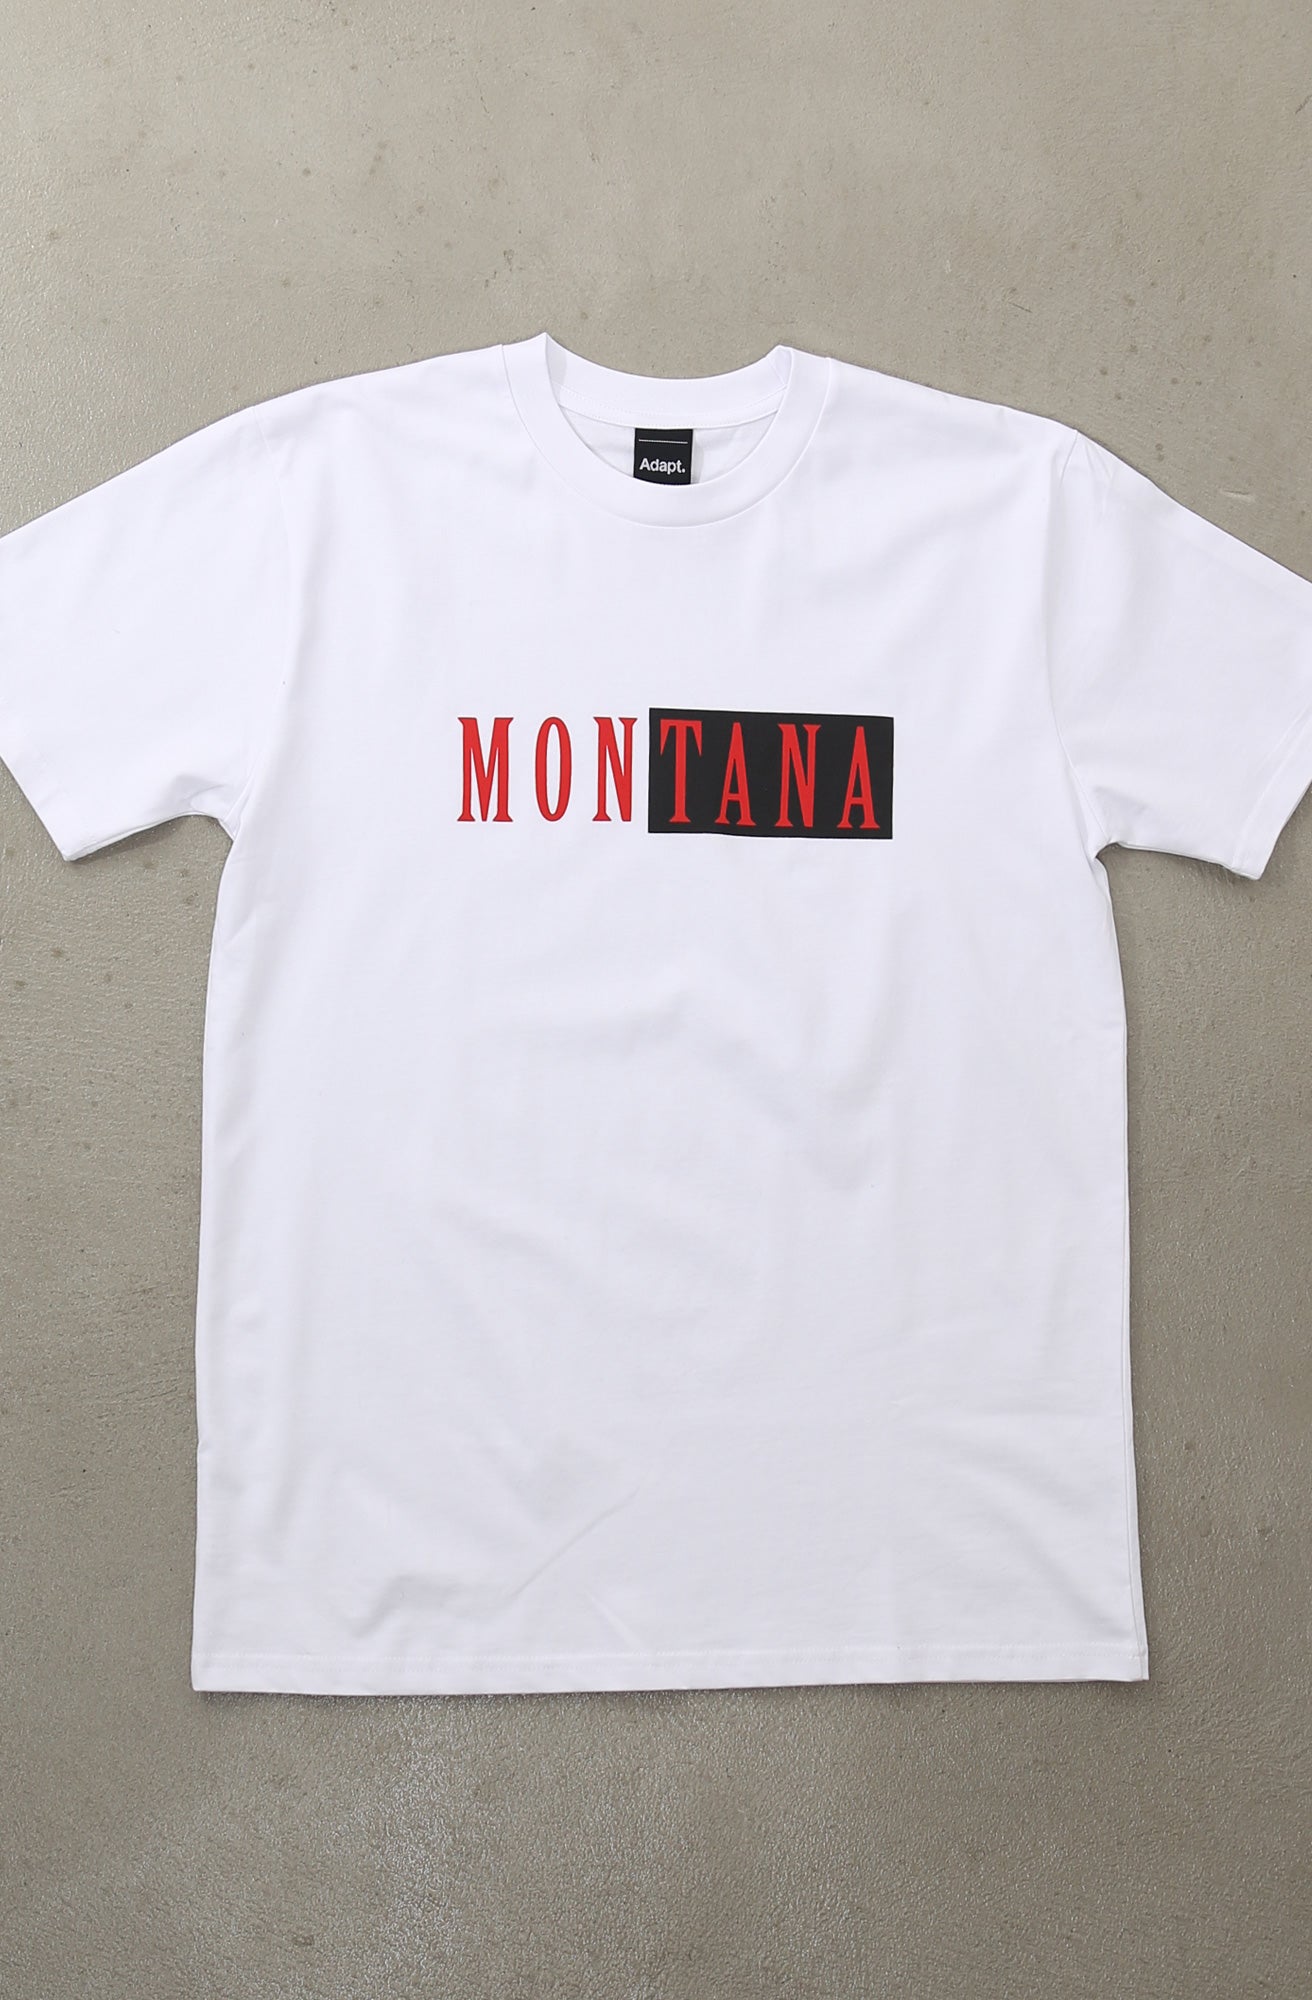 Montana (Men's White Tee)